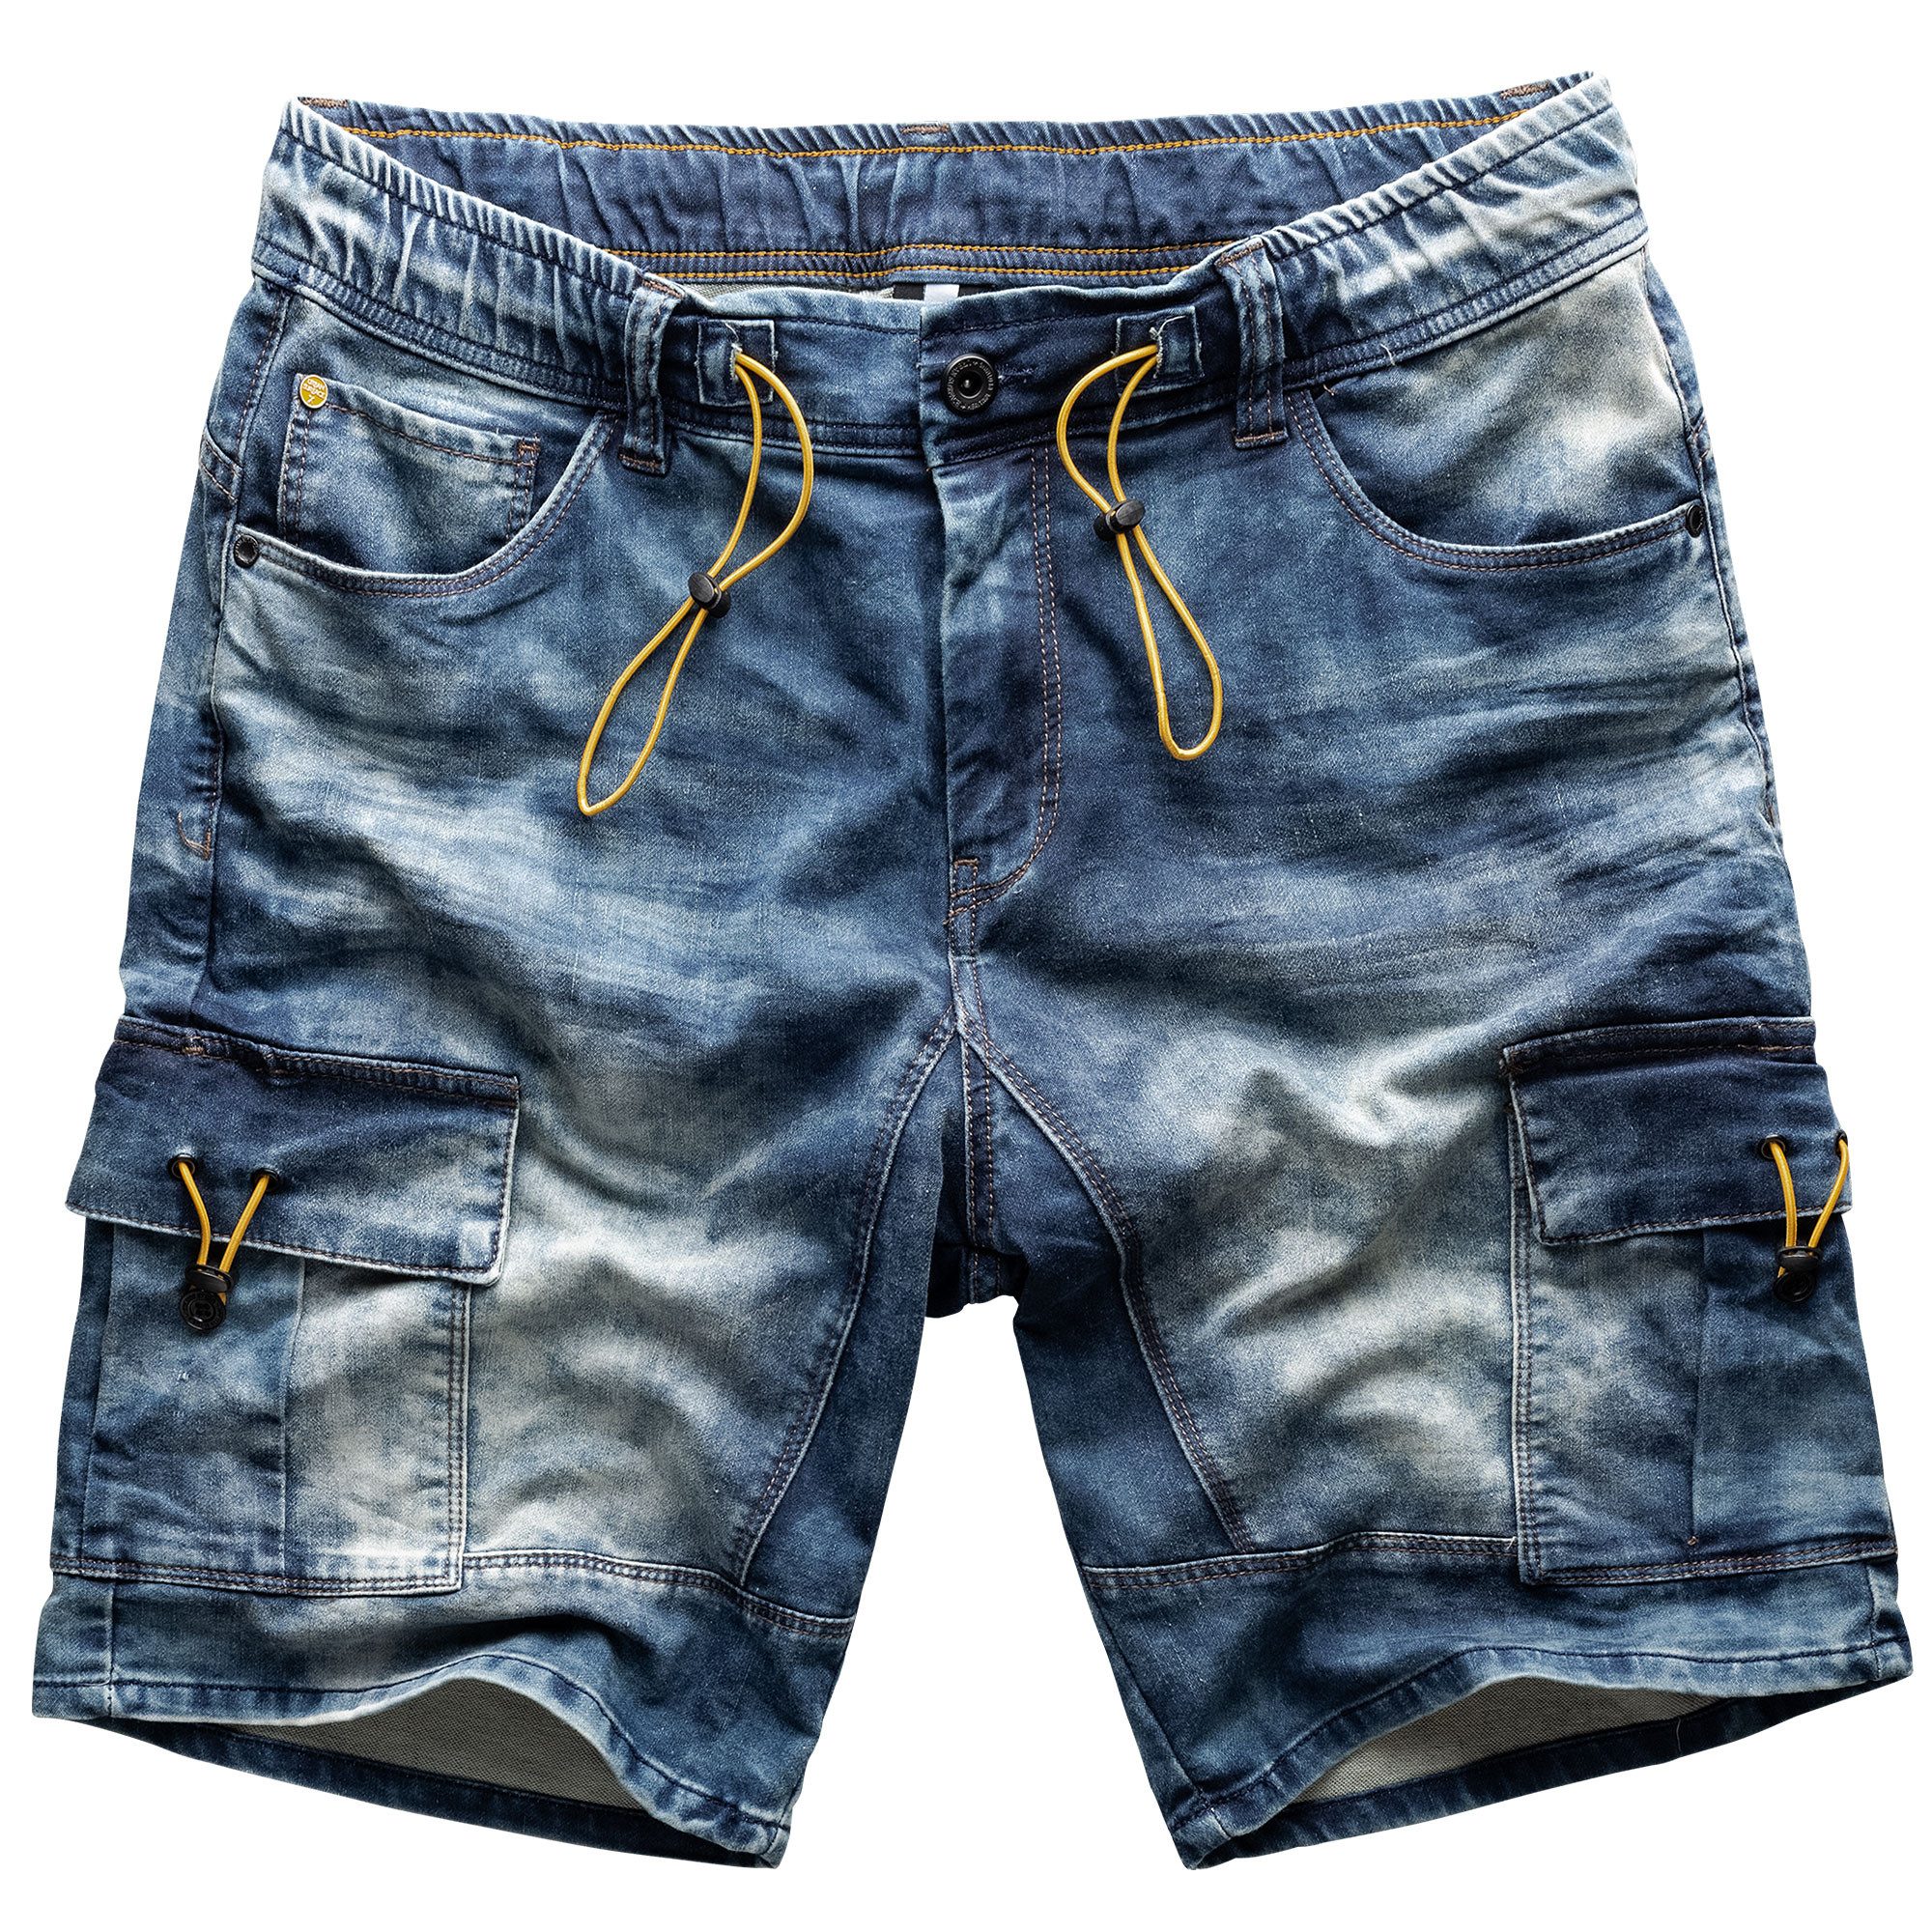 SUBLEVEL Shorts Sweat Shorts Jeans Kurze Hose Bermuda Sweatpant elatsicher Bund, Weitenregulierung, Dehnbar, Stretch